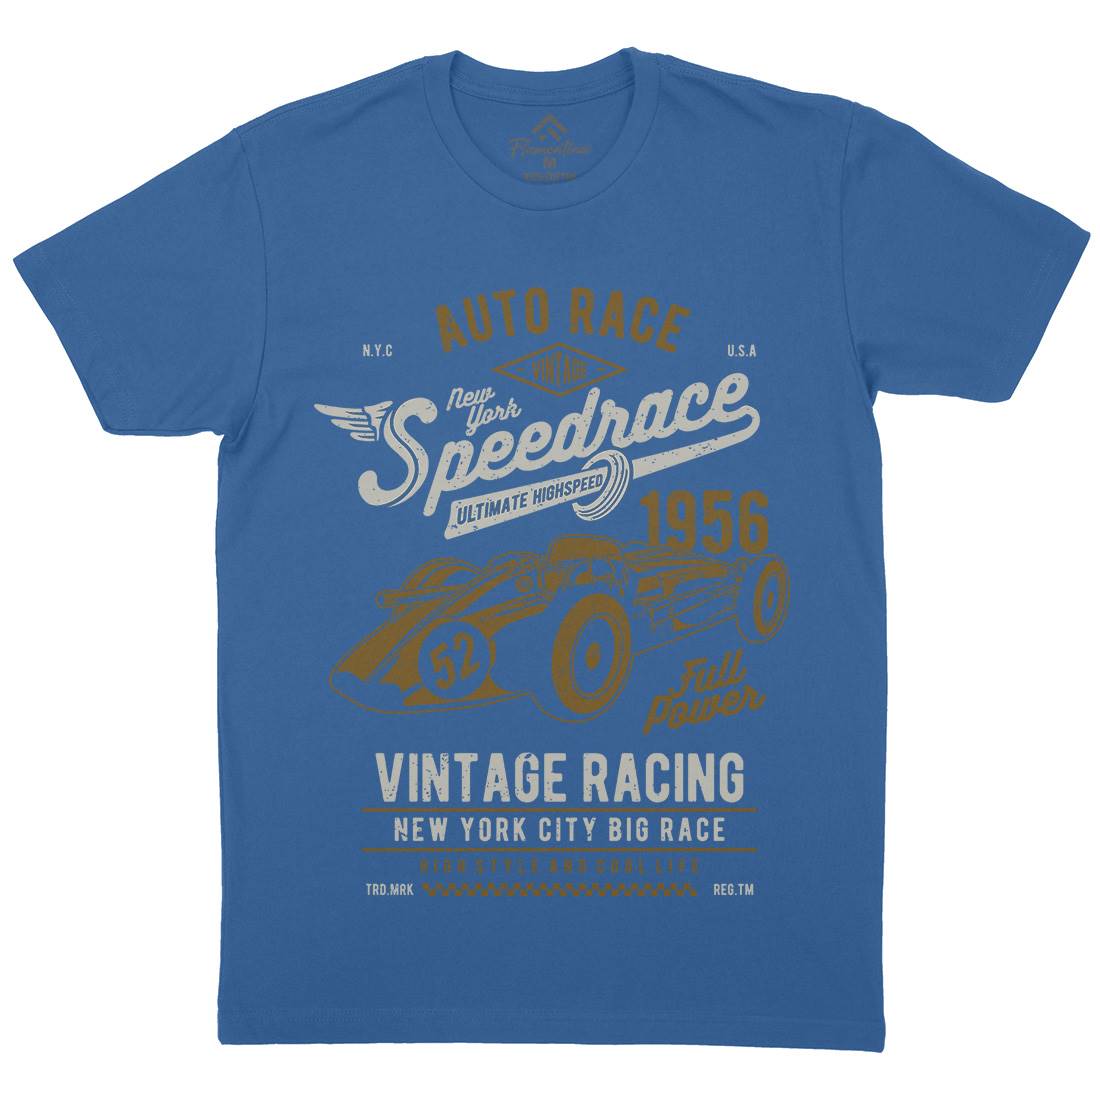 Vintage Speedrace Mens Organic Crew Neck T-Shirt Cars A788